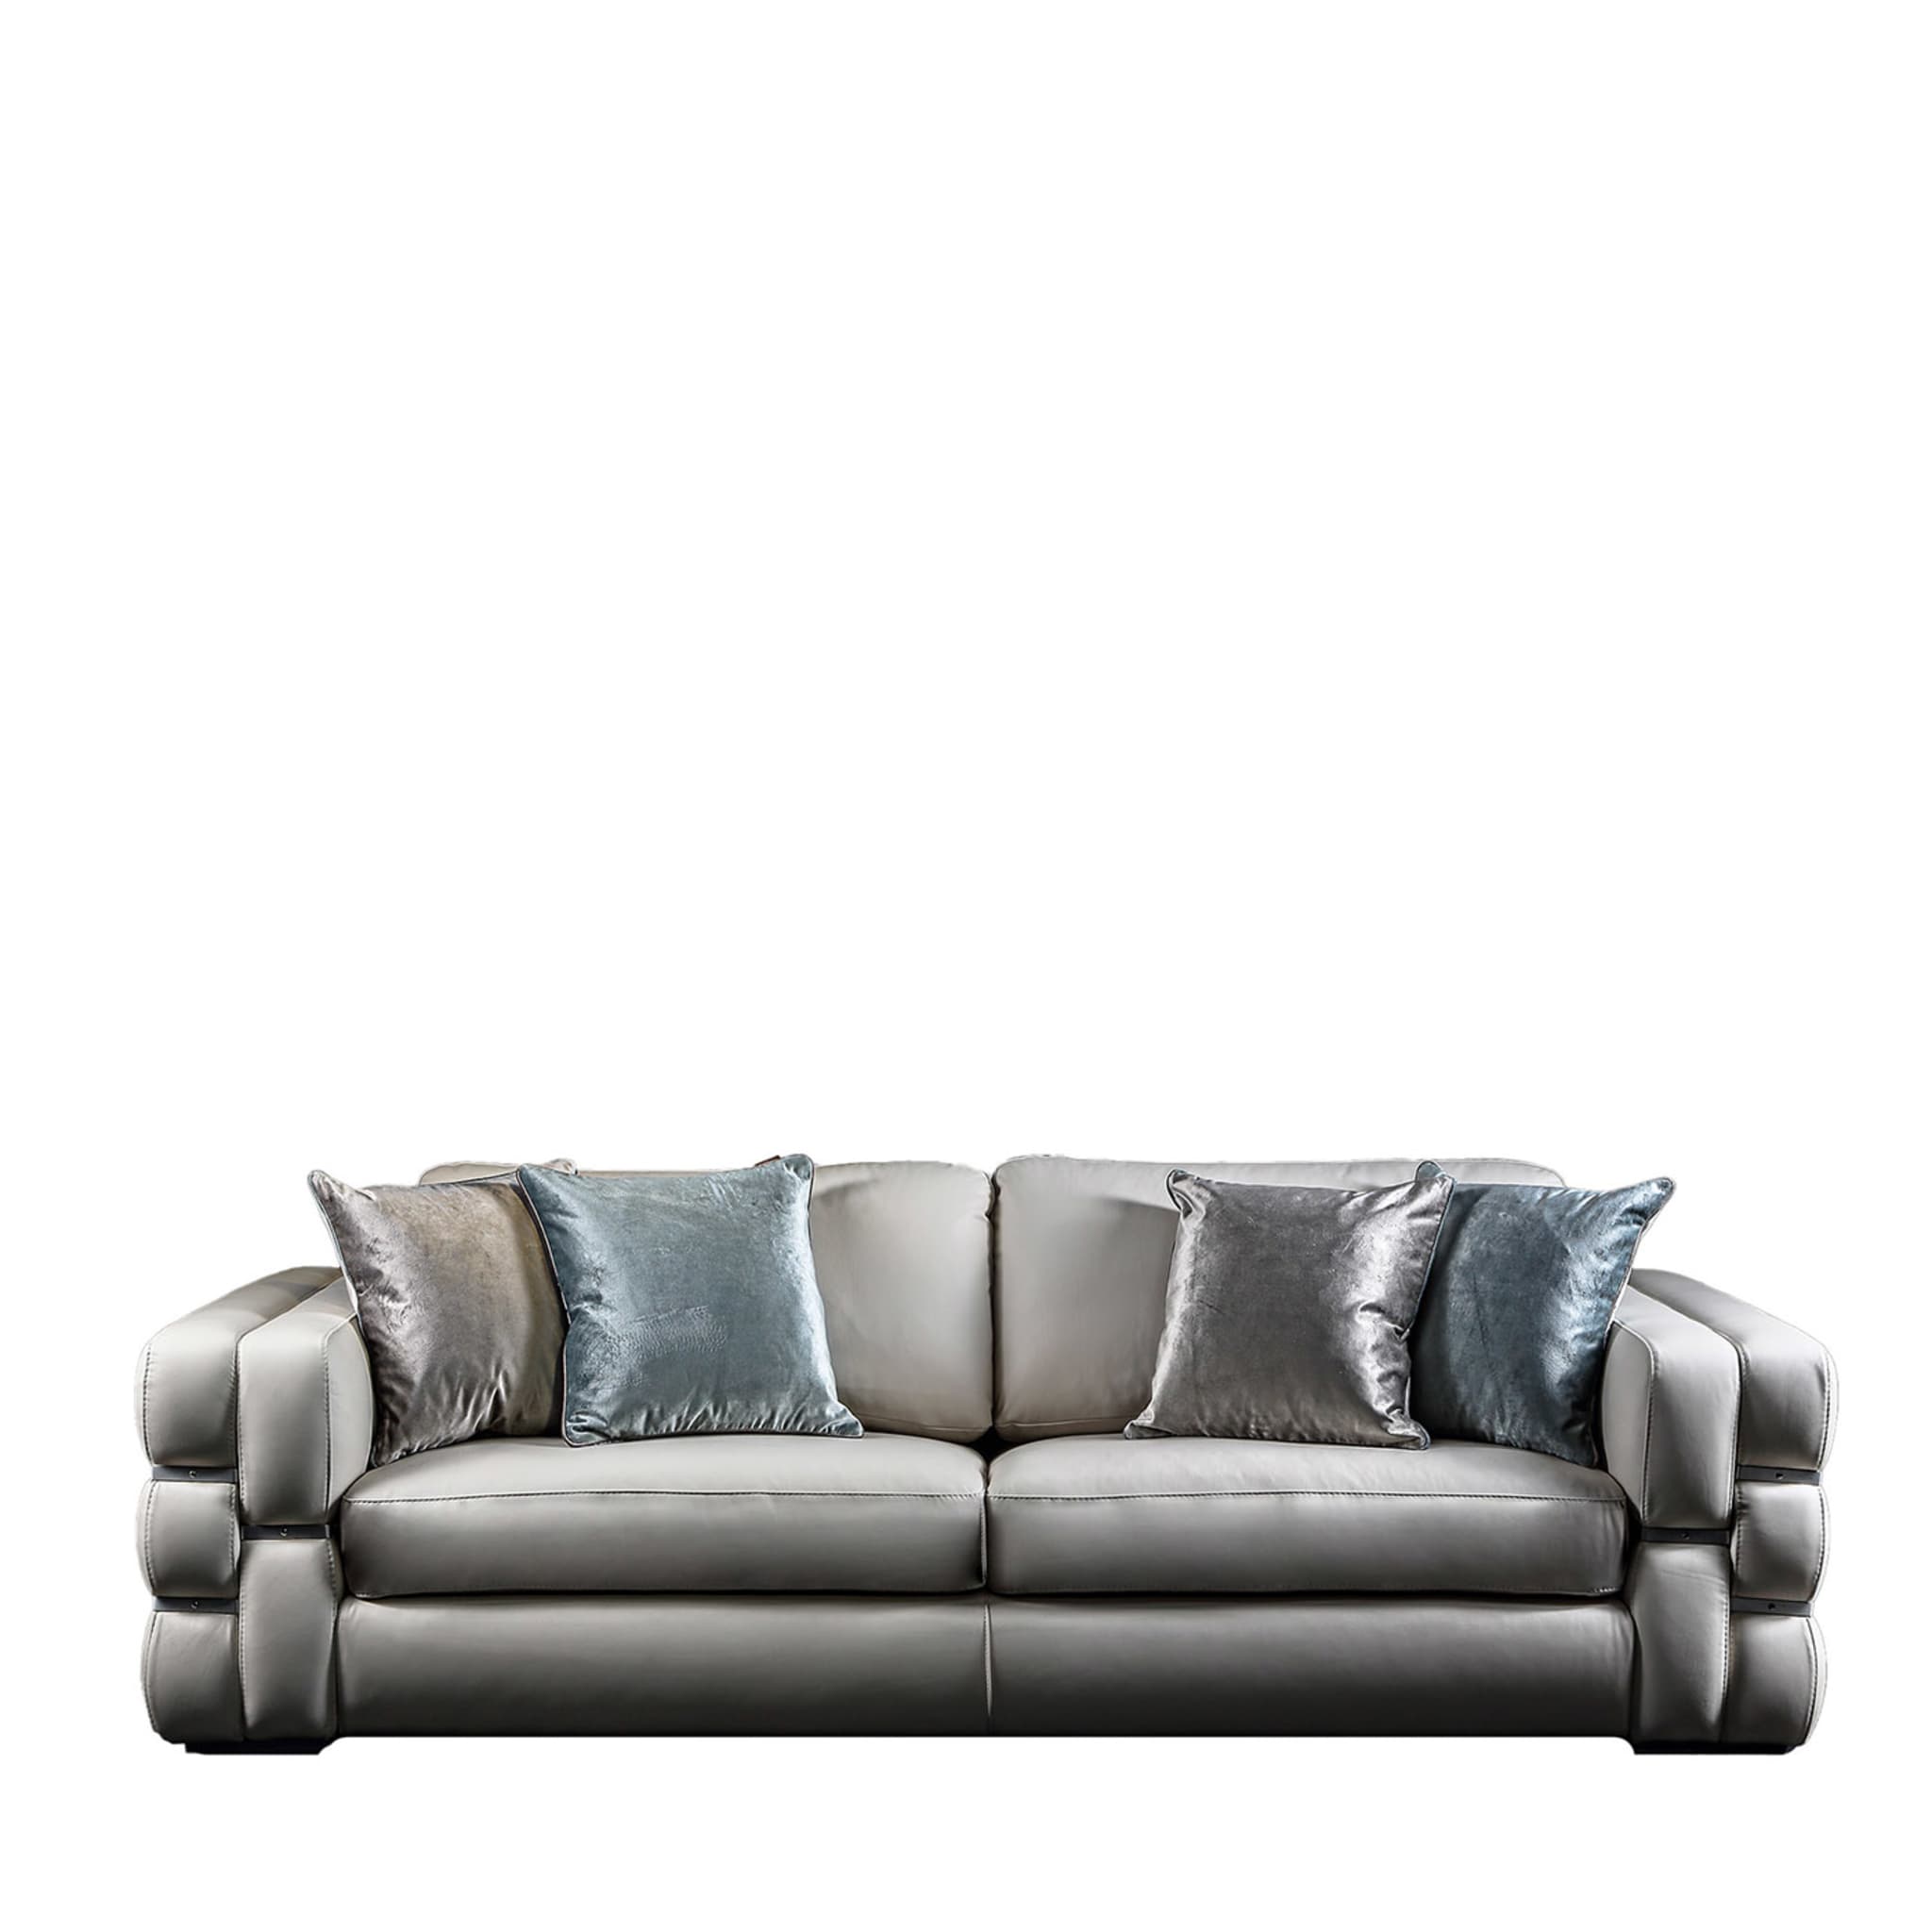 Ola Gray Leather Sofa Cosmopolitan Collection - Main view